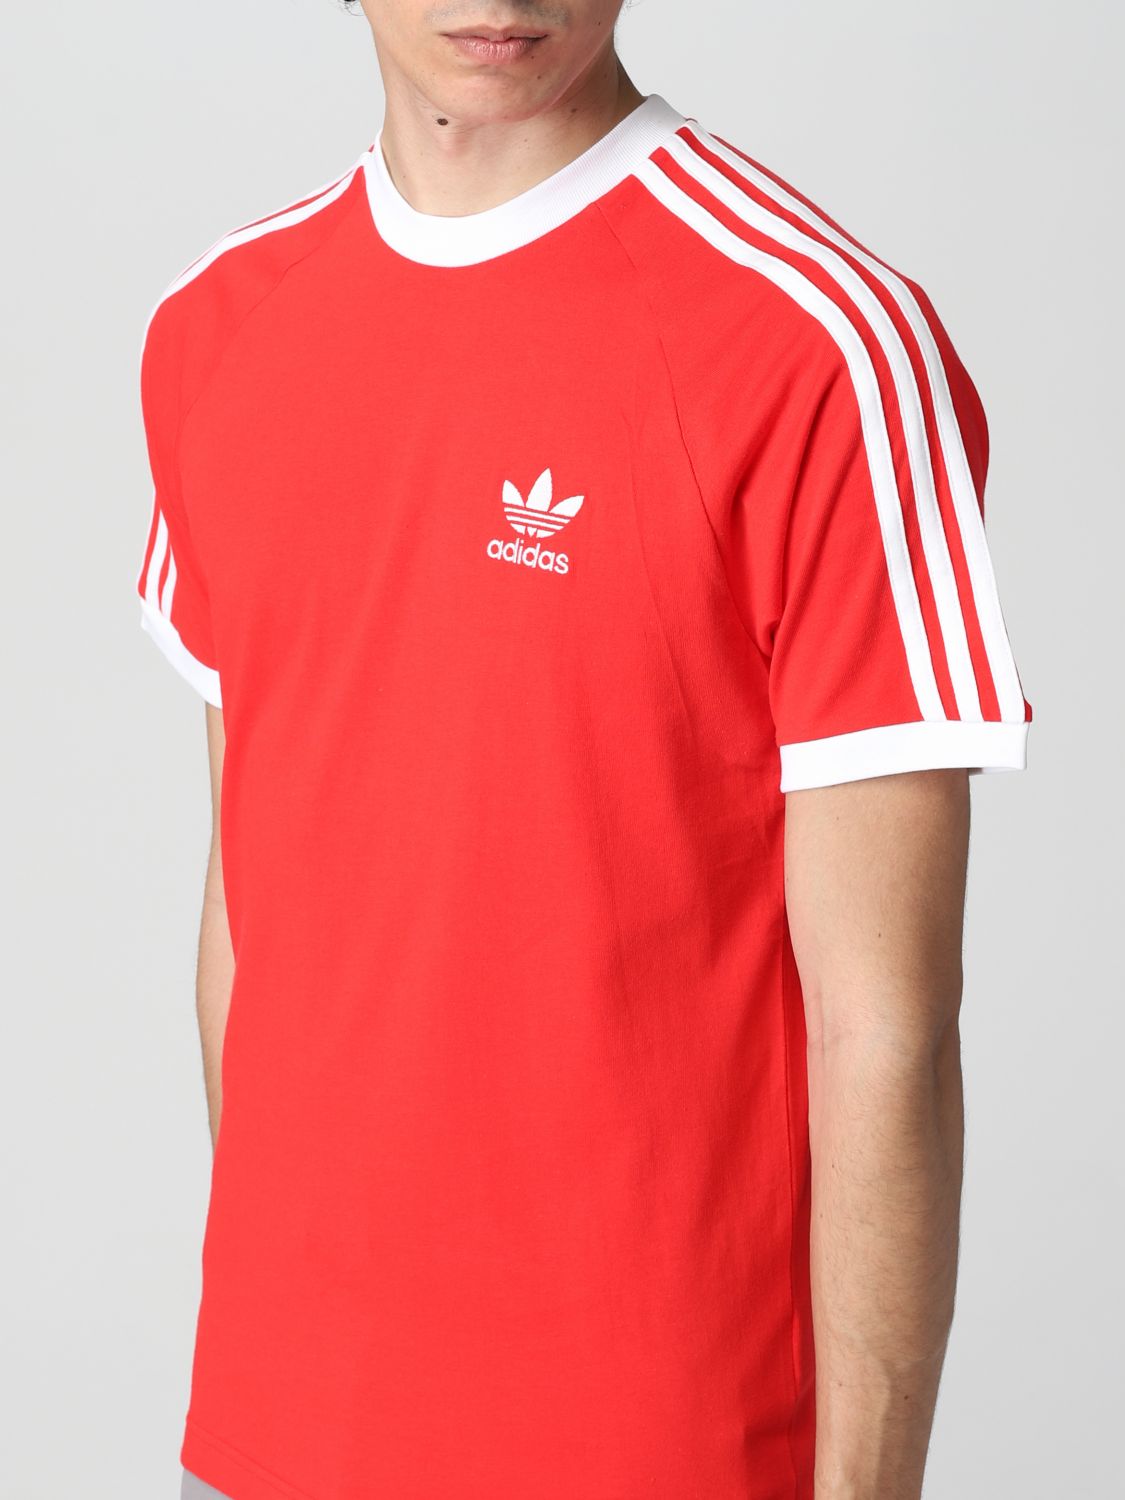 ADIDAS ORIGINALS: T-shirt with logo - Red | Adidas t-shirt HE9547 online on GIGLIO.COM